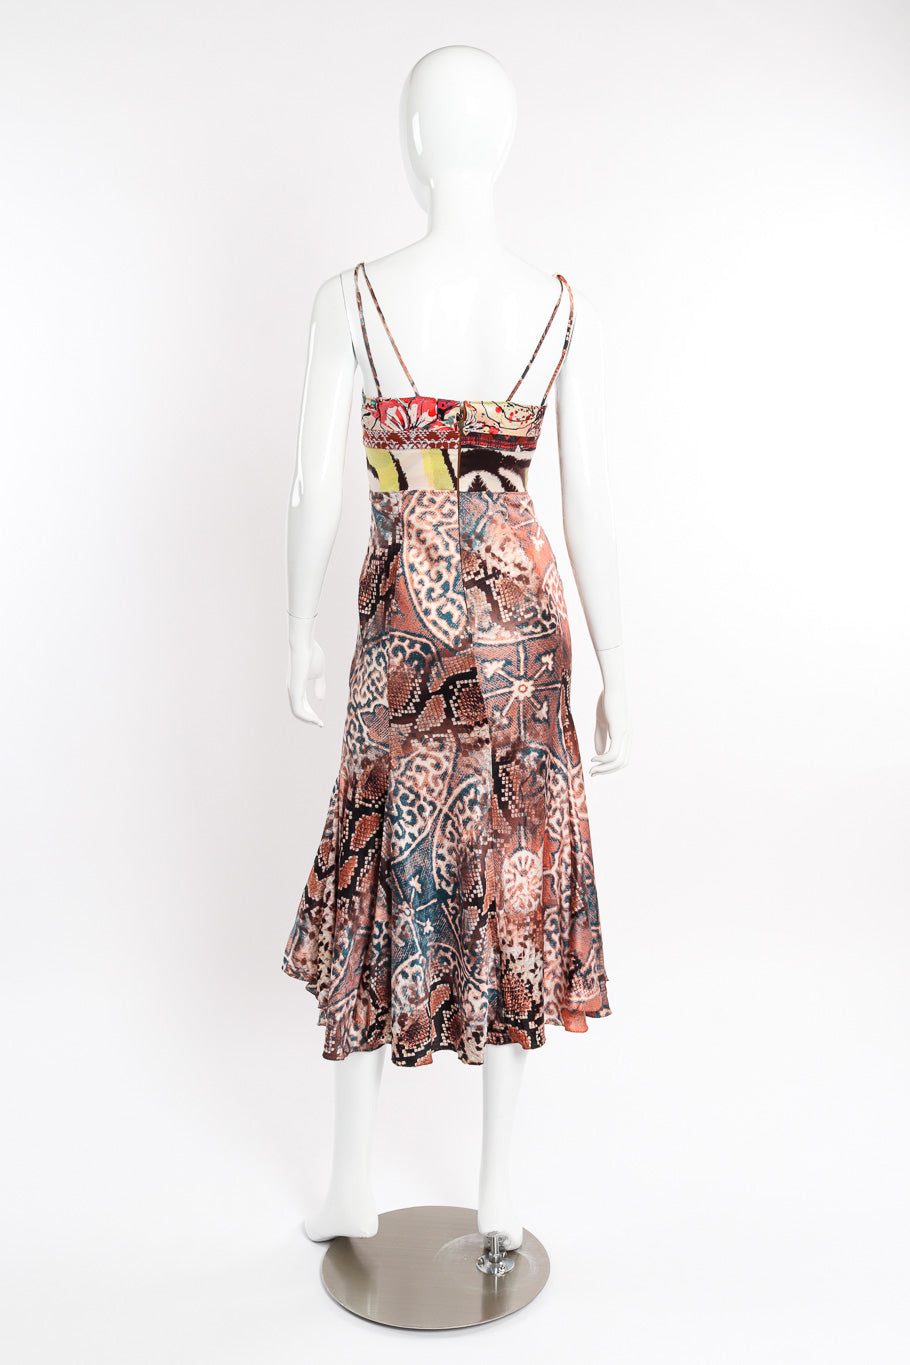 Just Cavalli Patchwork Bias Silk Dress back view on mannequin @recessla